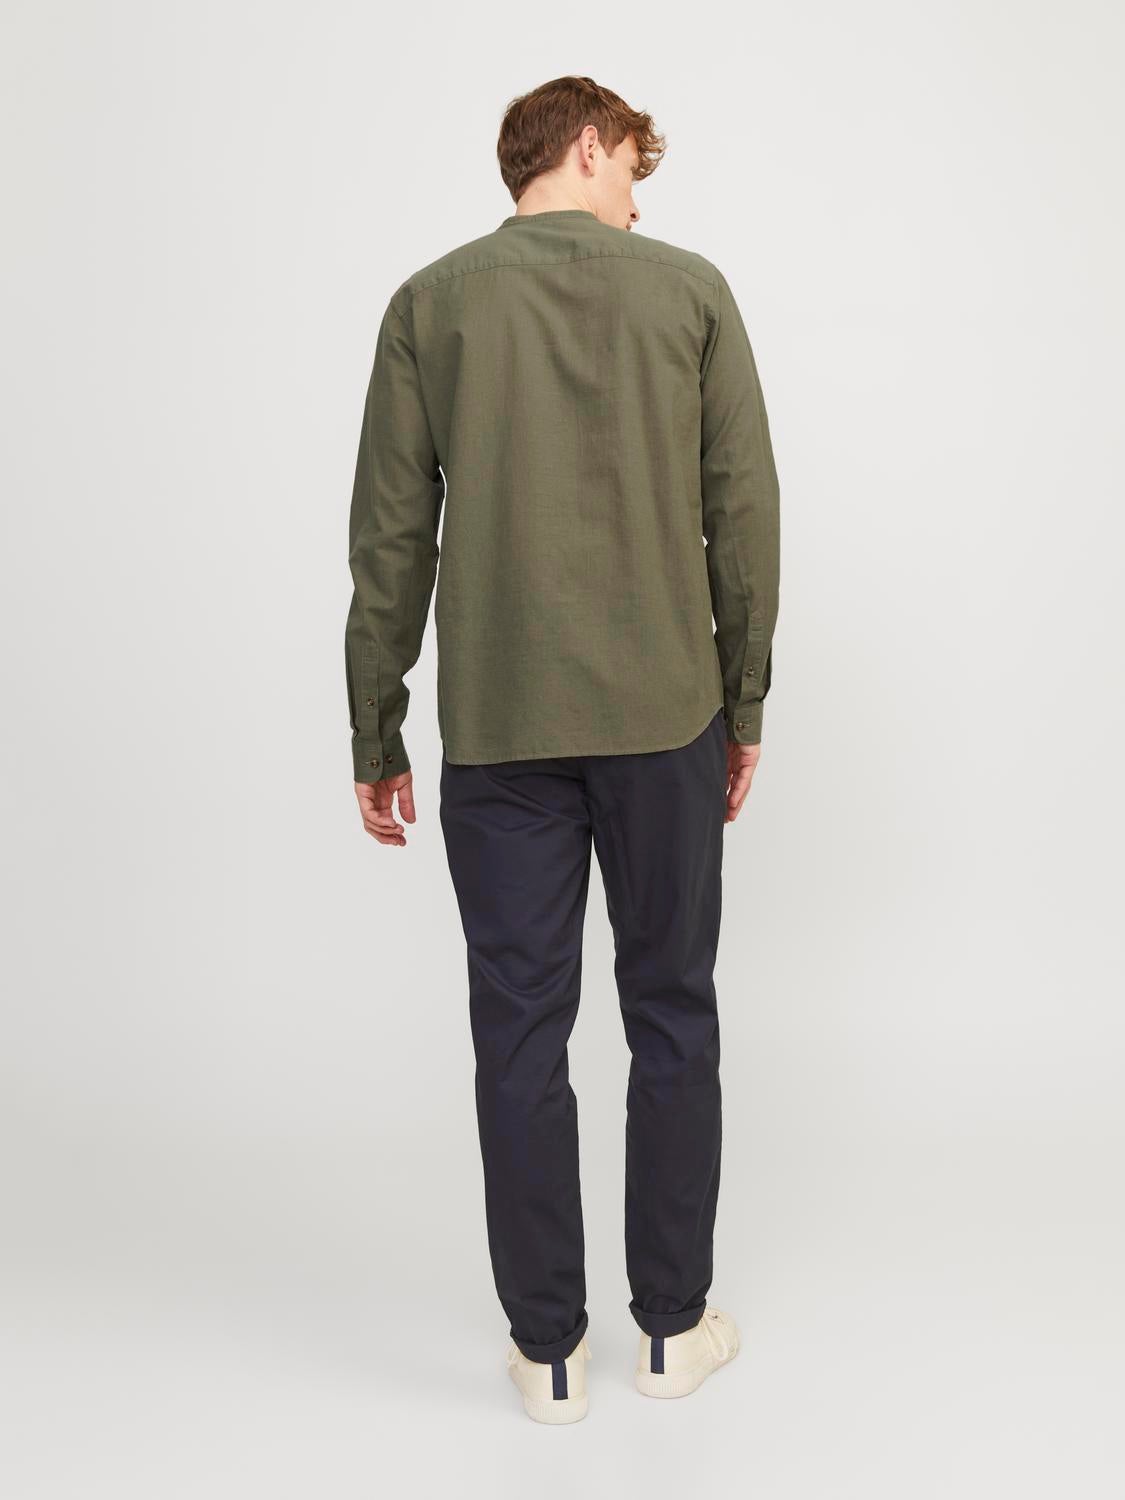 Jonas 6530 men's overshirt - Green - Buy online at NN.07®